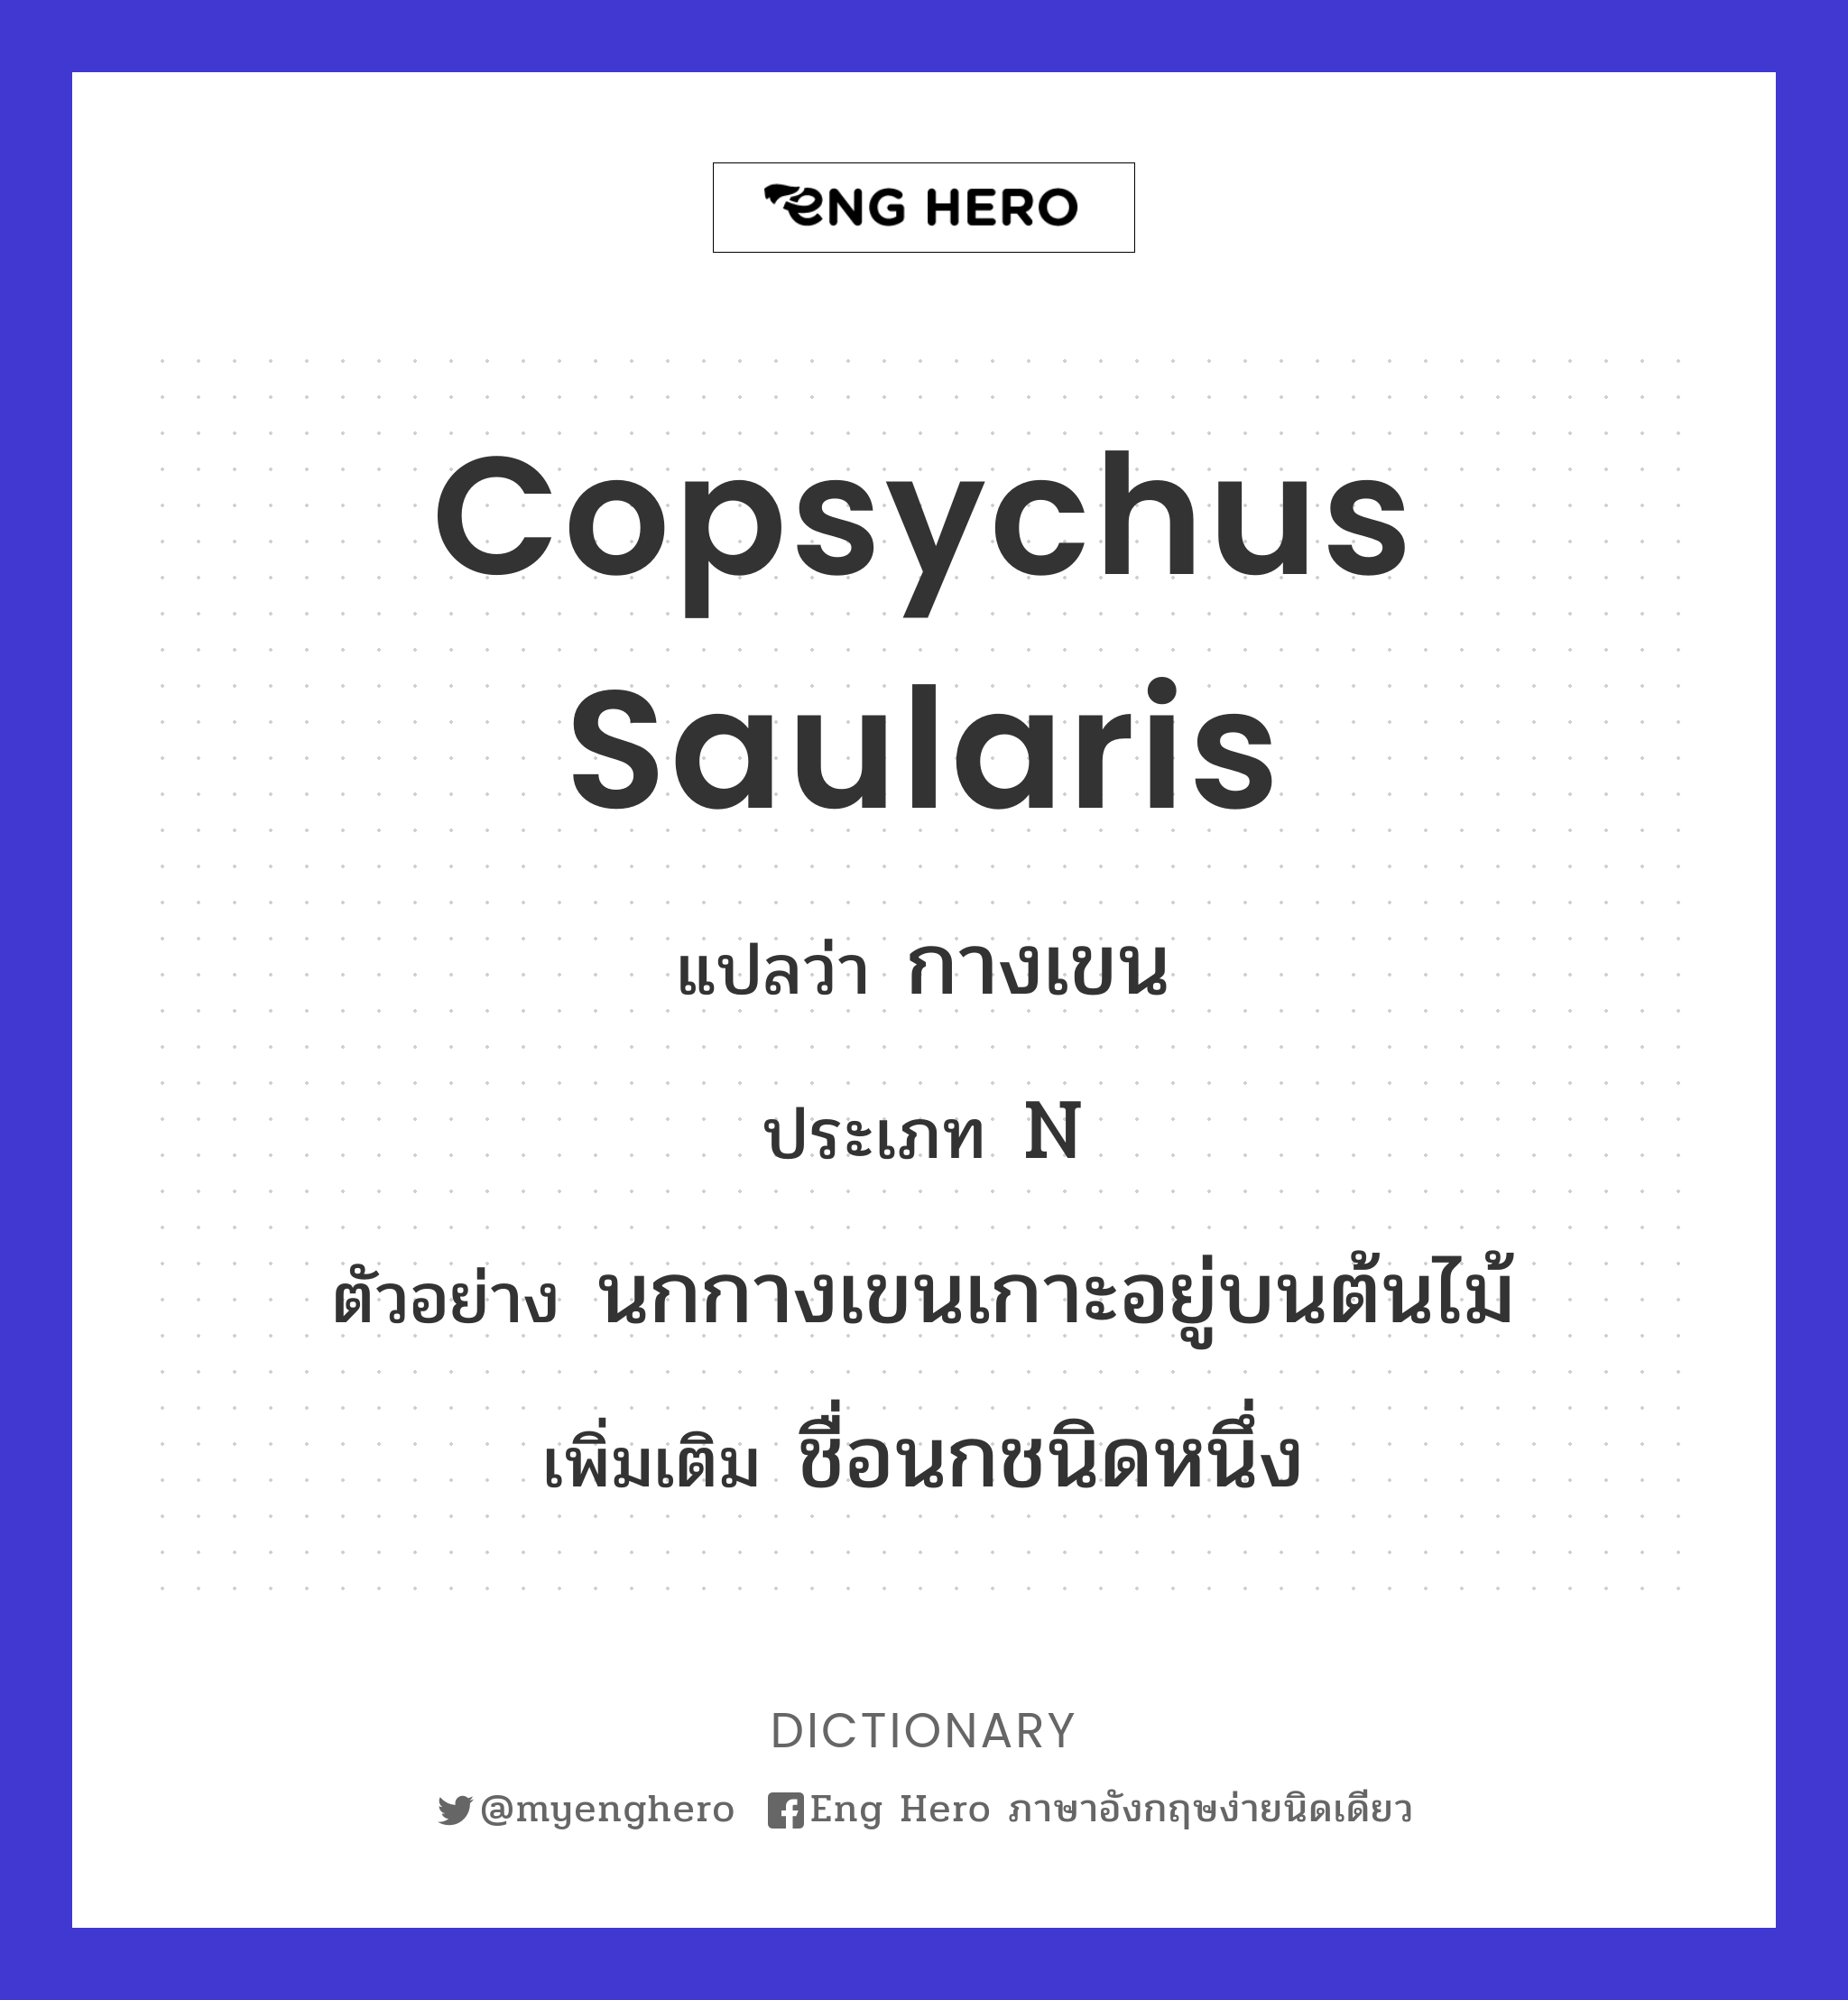 Copsychus saularis